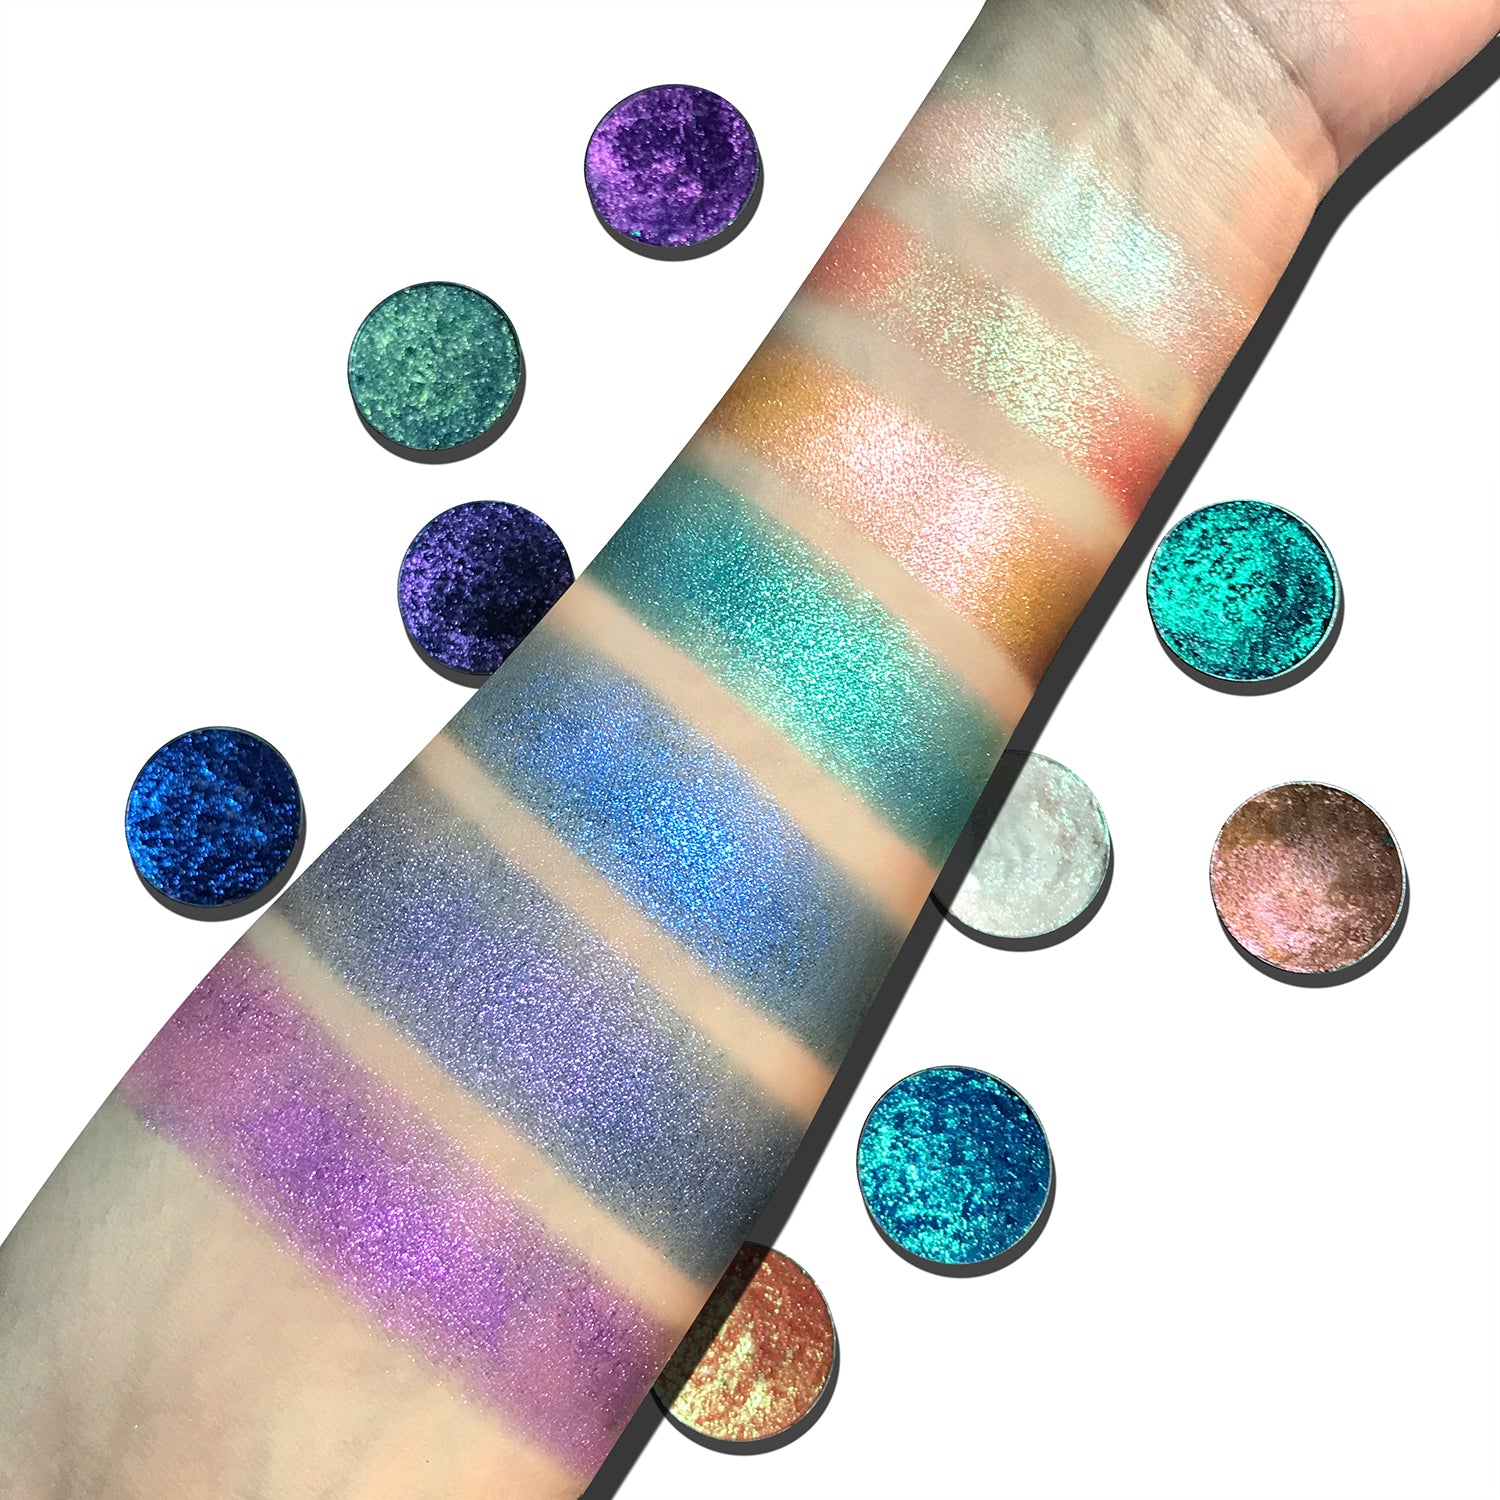 DE'LANCI Rainbow Multichrome Chameleon Eyeshadow #4G Rose Princess –  De'lanci Beauty